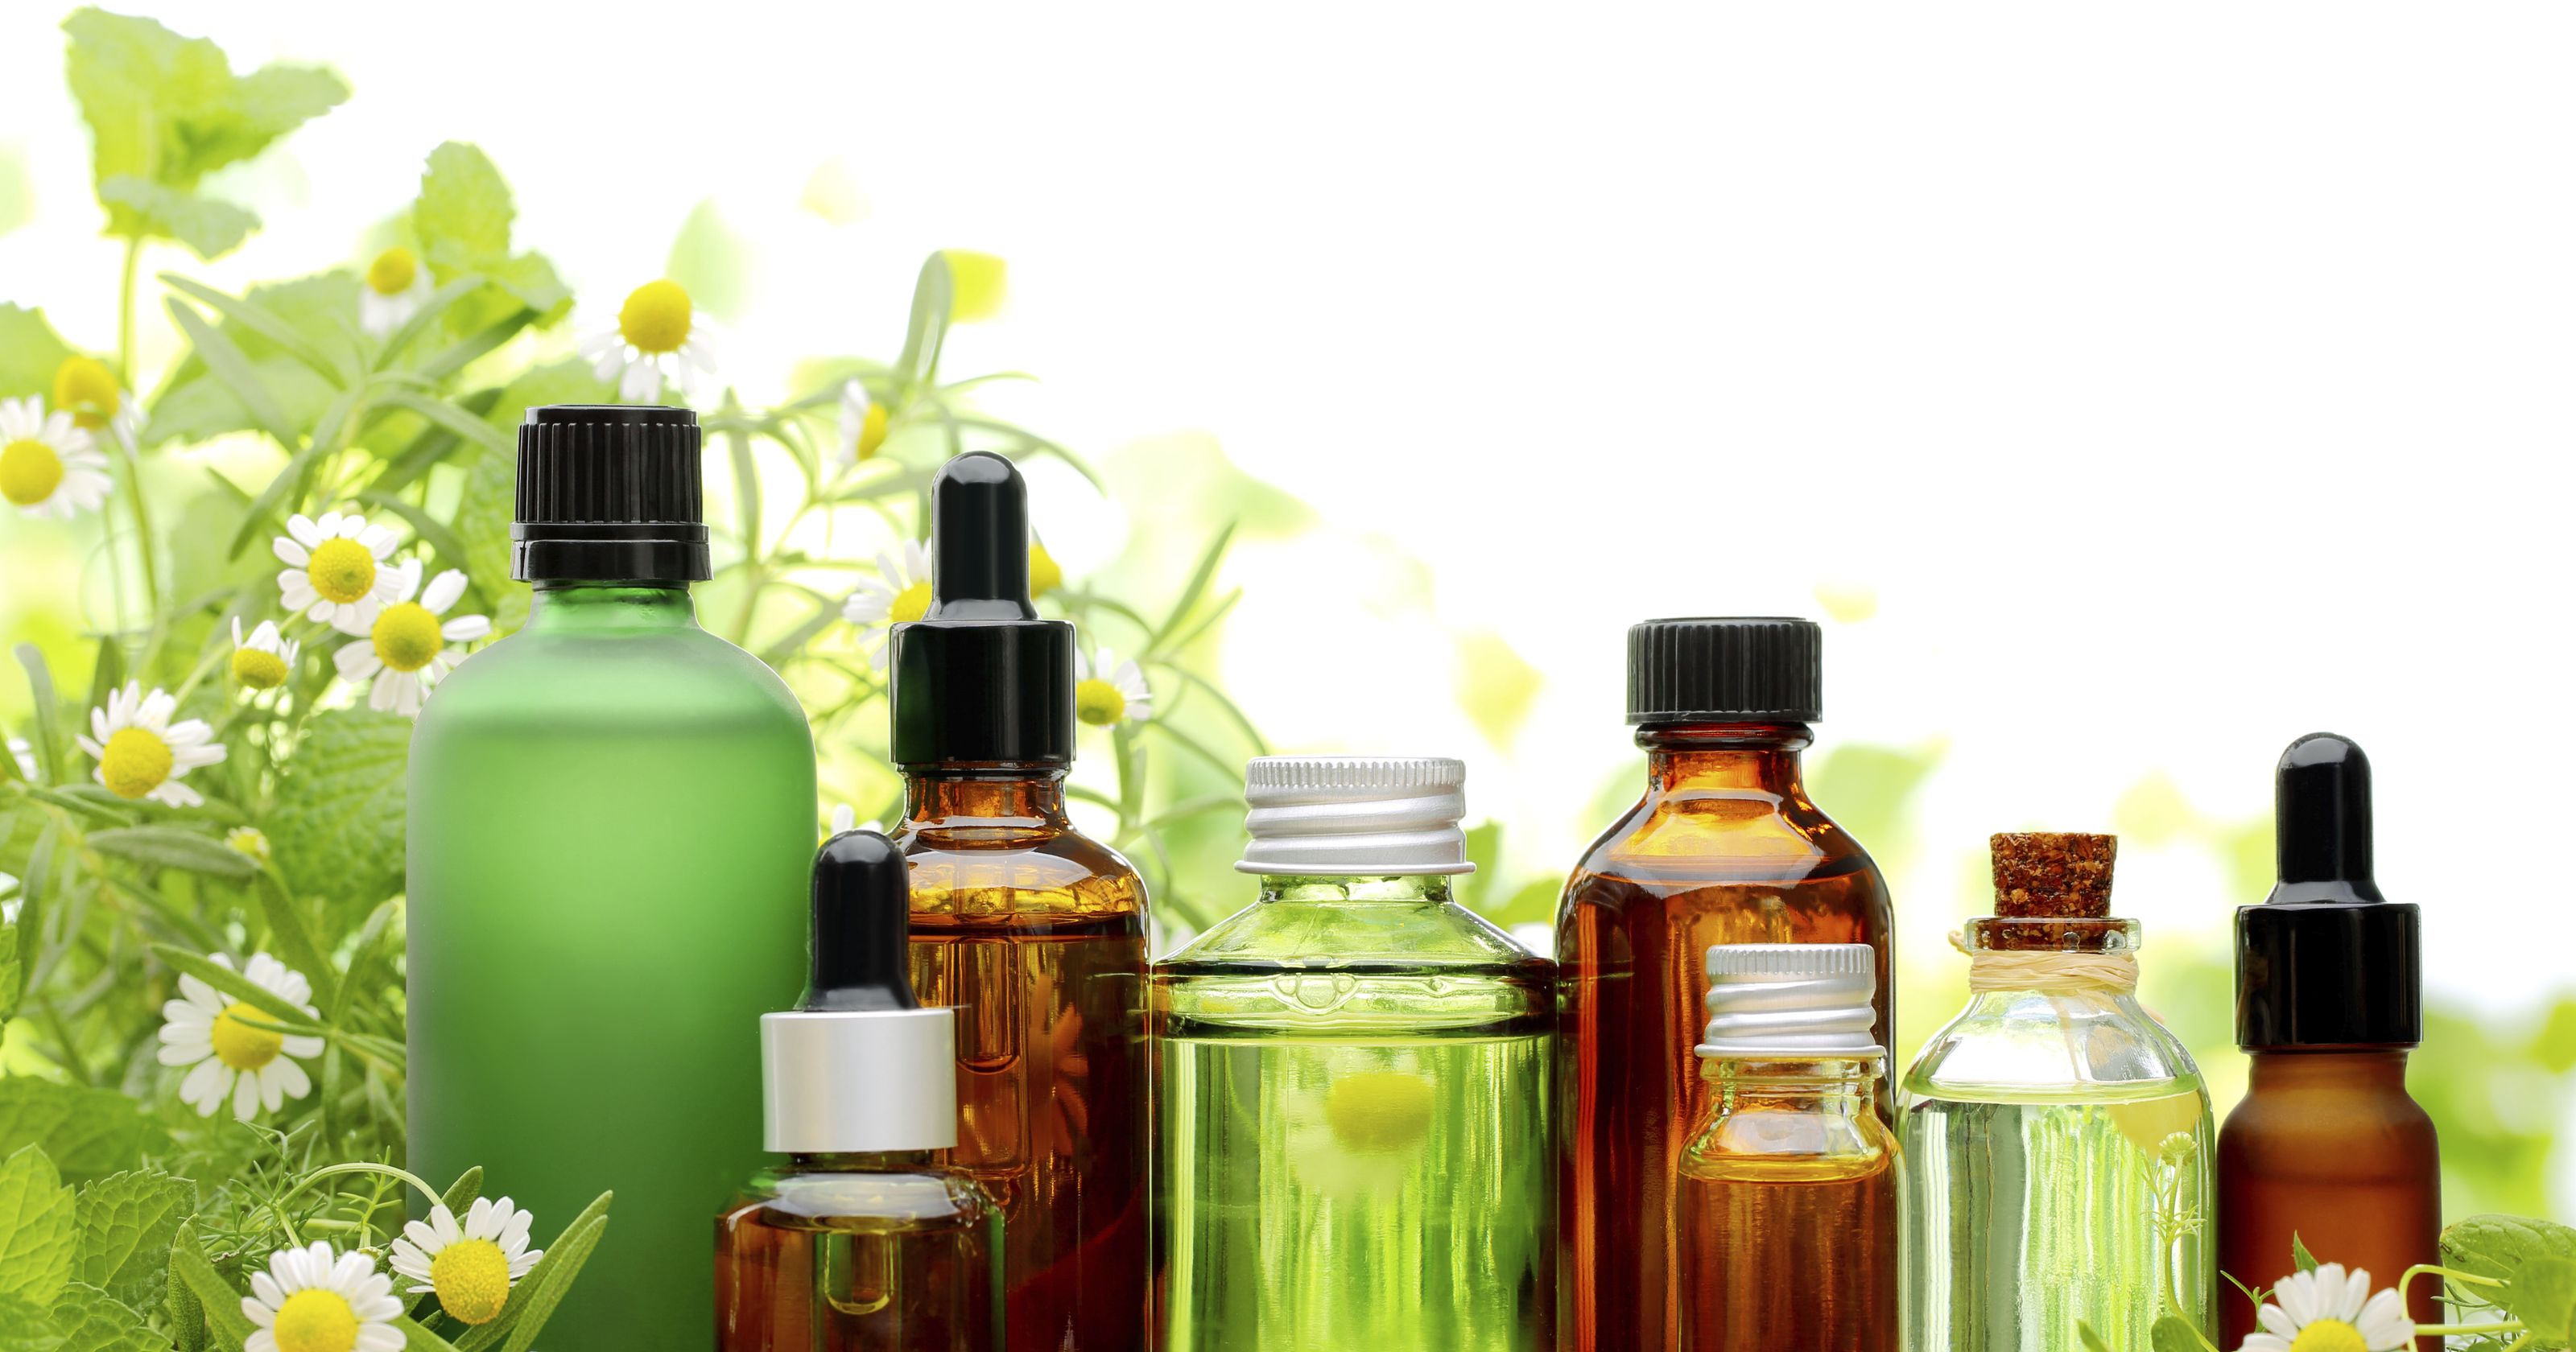 How to Make Essential Oils | Med-Health.net